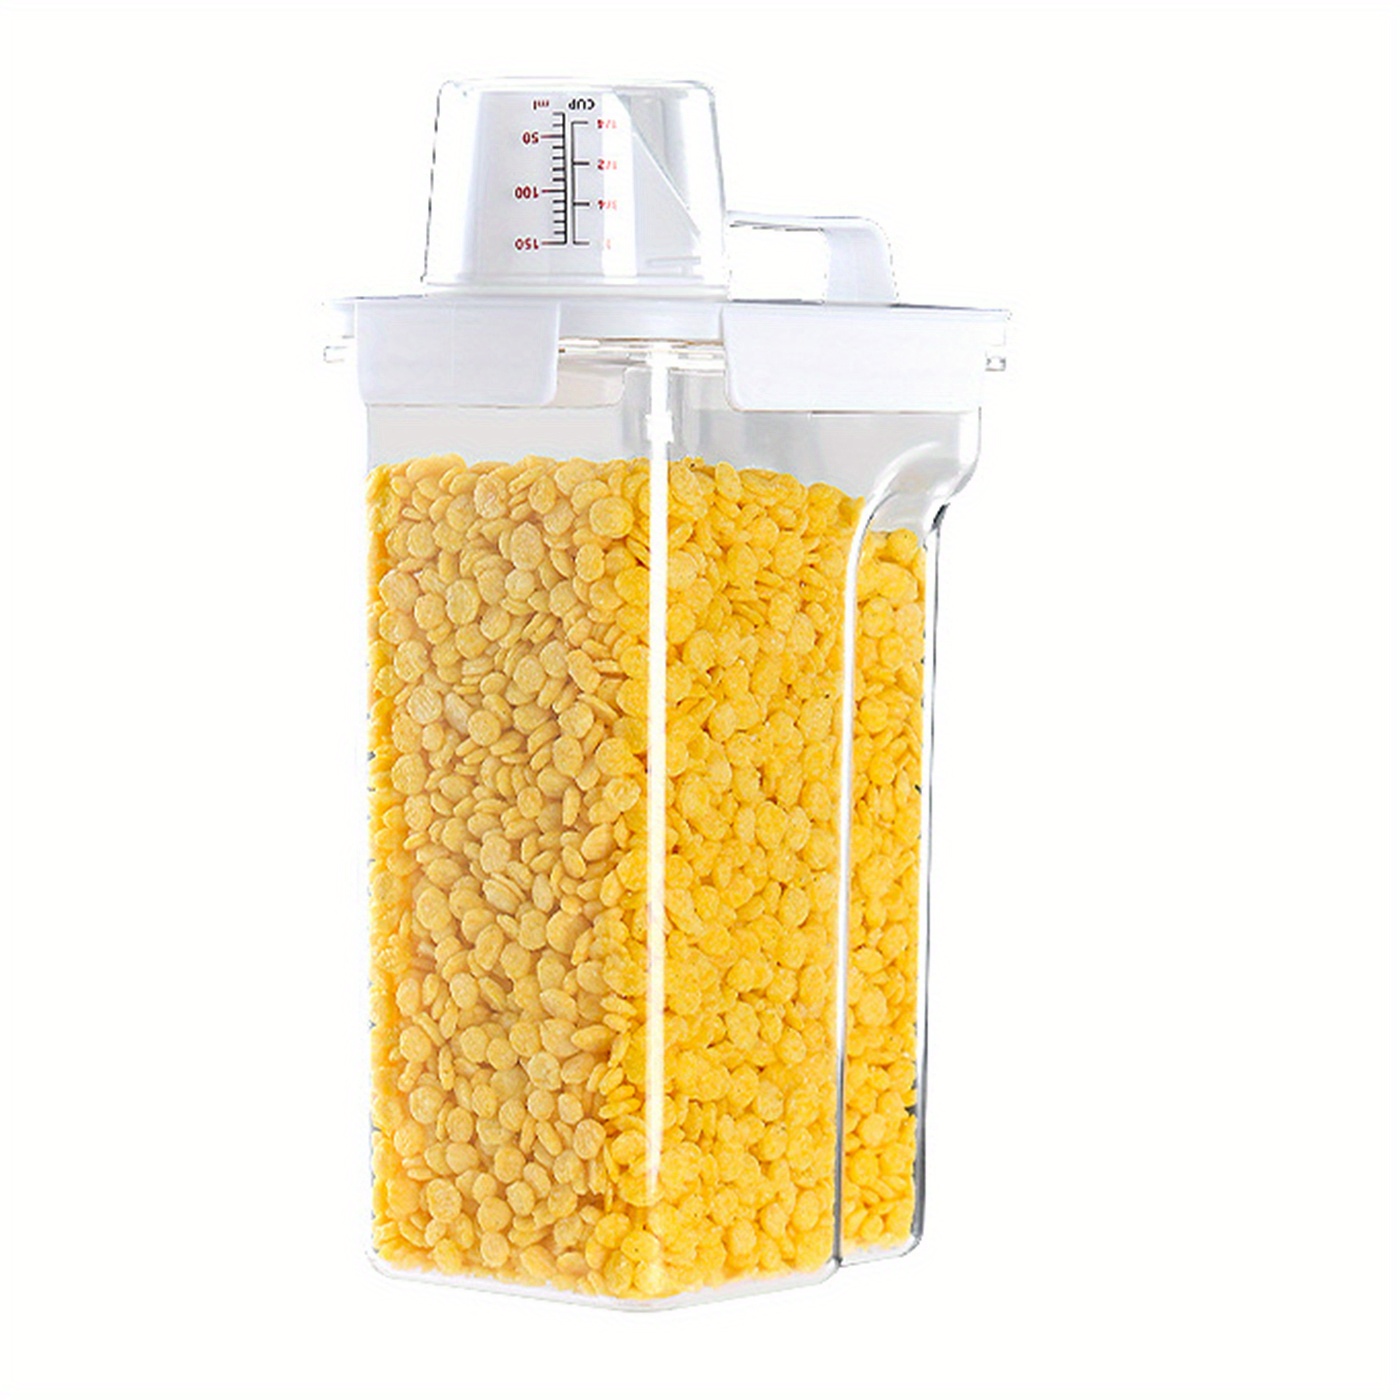  Bzdzmqm Dispensador de cereales de plástico de 67.6 fl oz, caja  de almacenamiento de alimentos para cocina, contenedor de arroz,  contenedores de almacenamiento, cajas herméticas para avena, granos,  harina, soja 